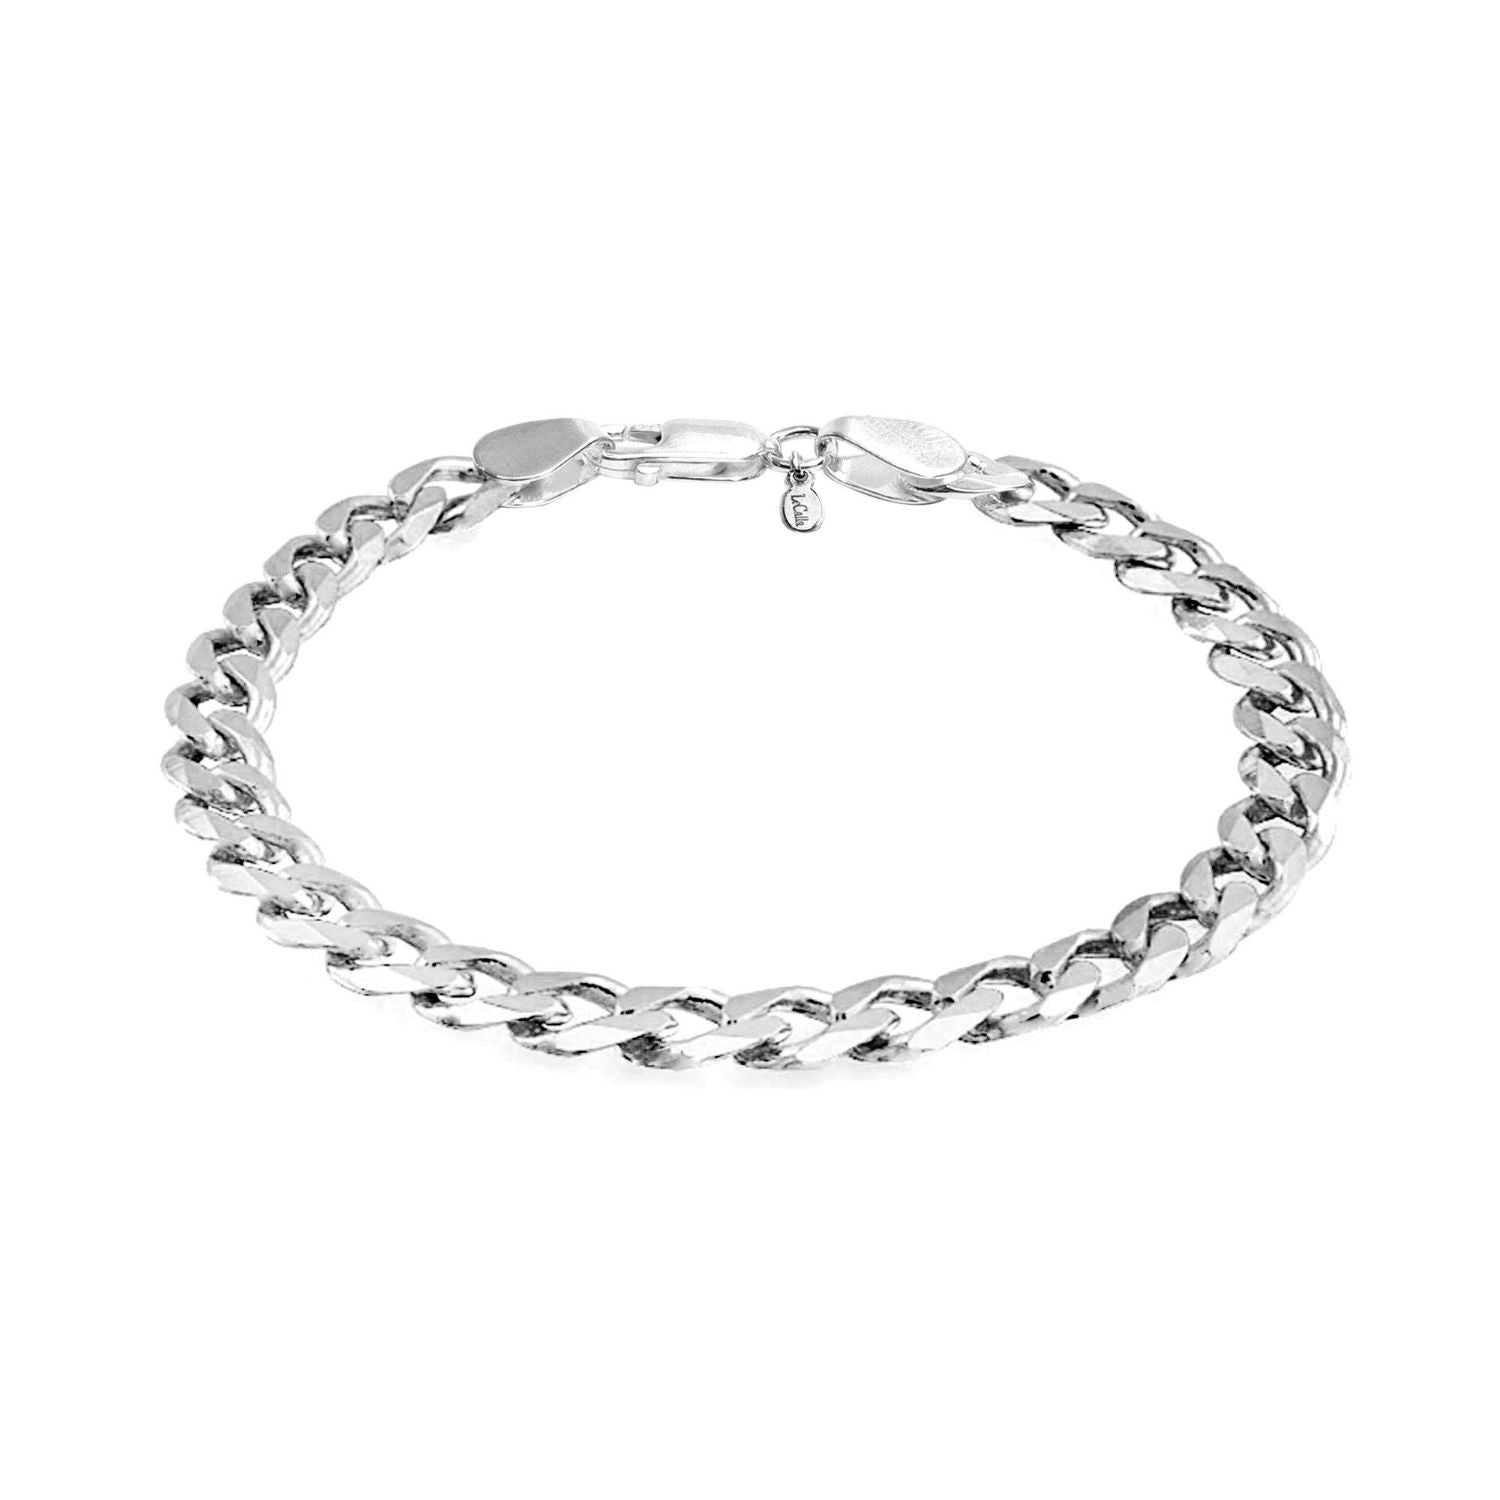 Buy 925 Sterling Silver 6.5 MM Curb Chain Bracelet for Men 8.5IN